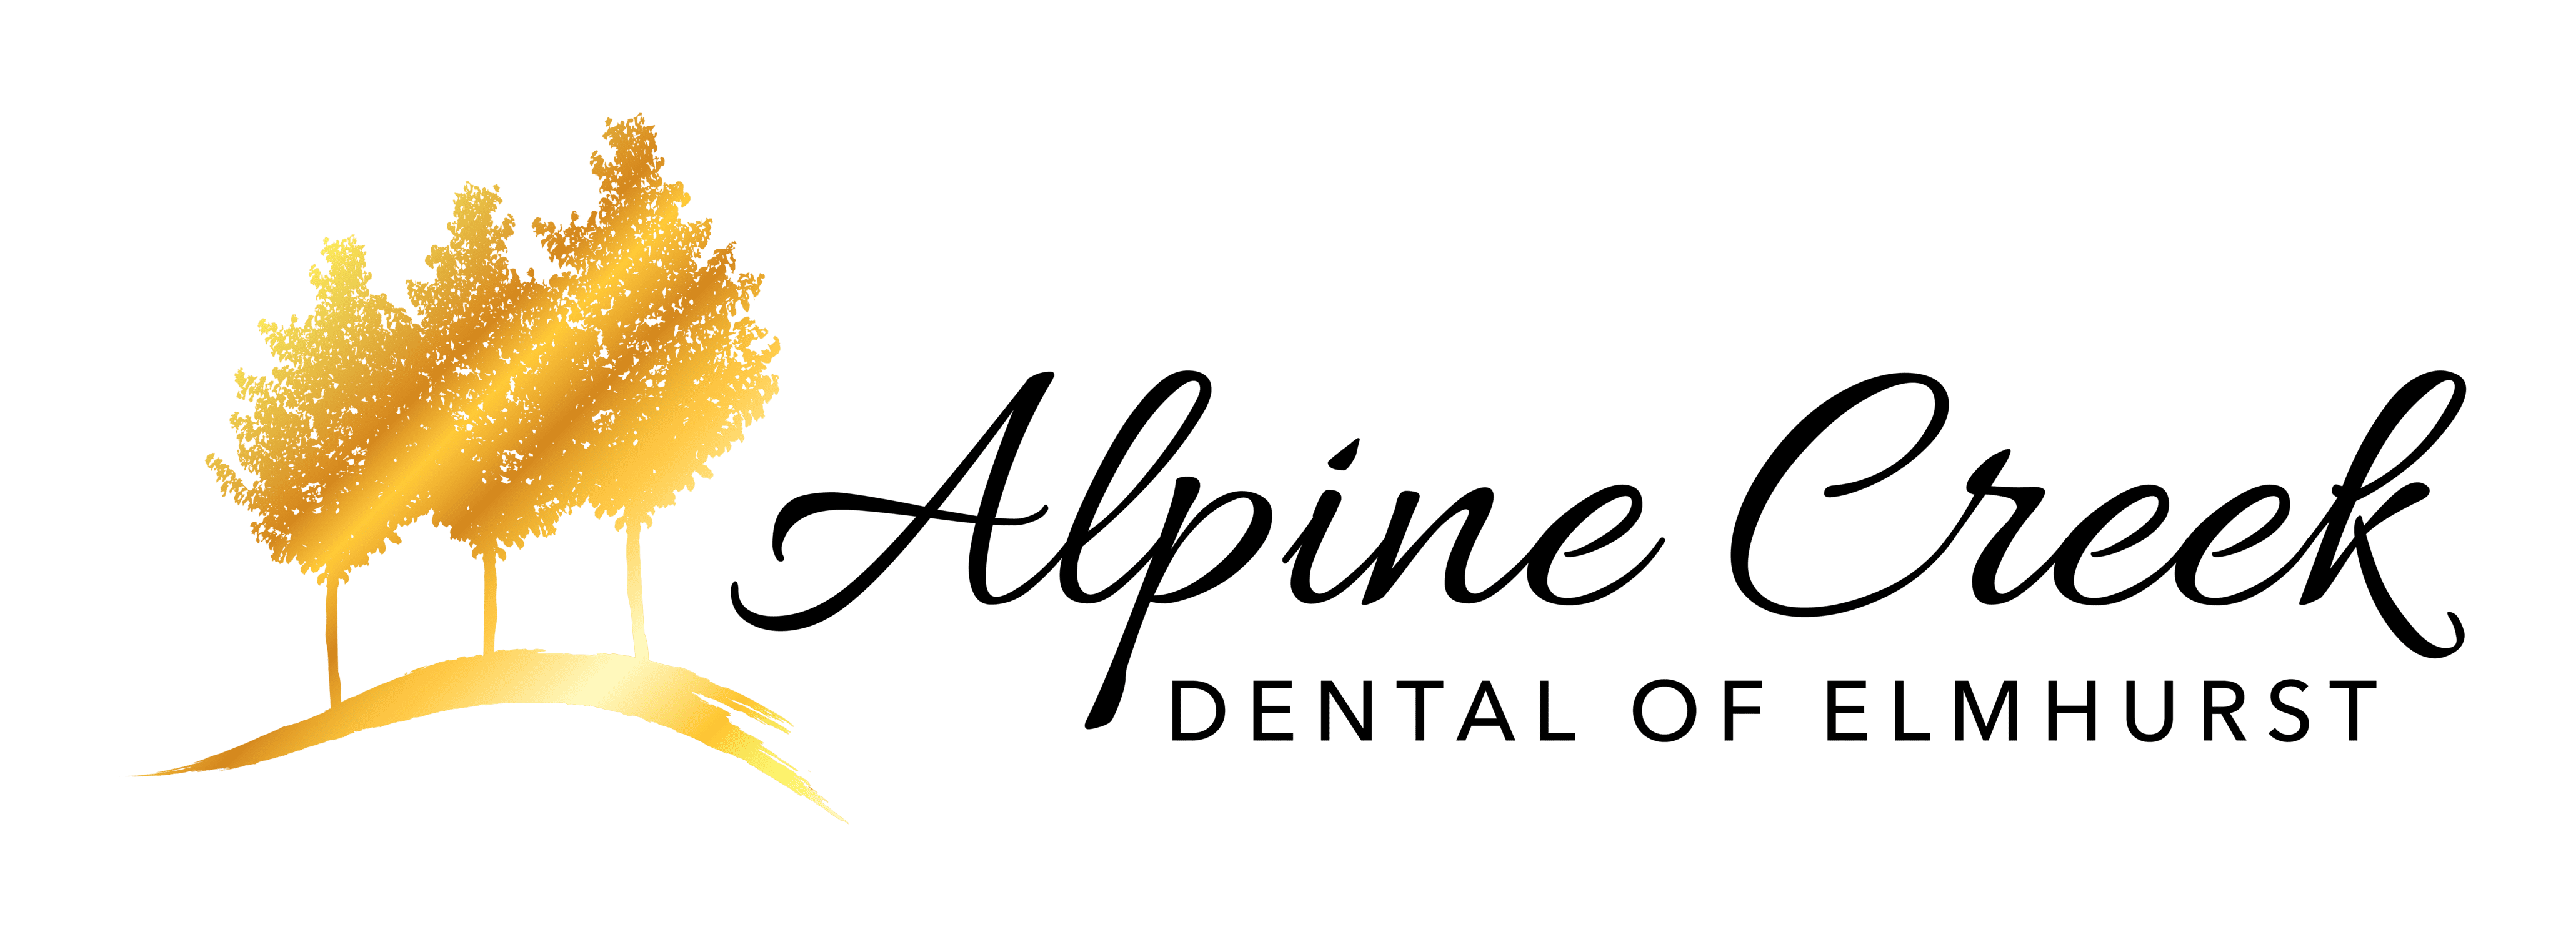 AlpineCreekDental_logo